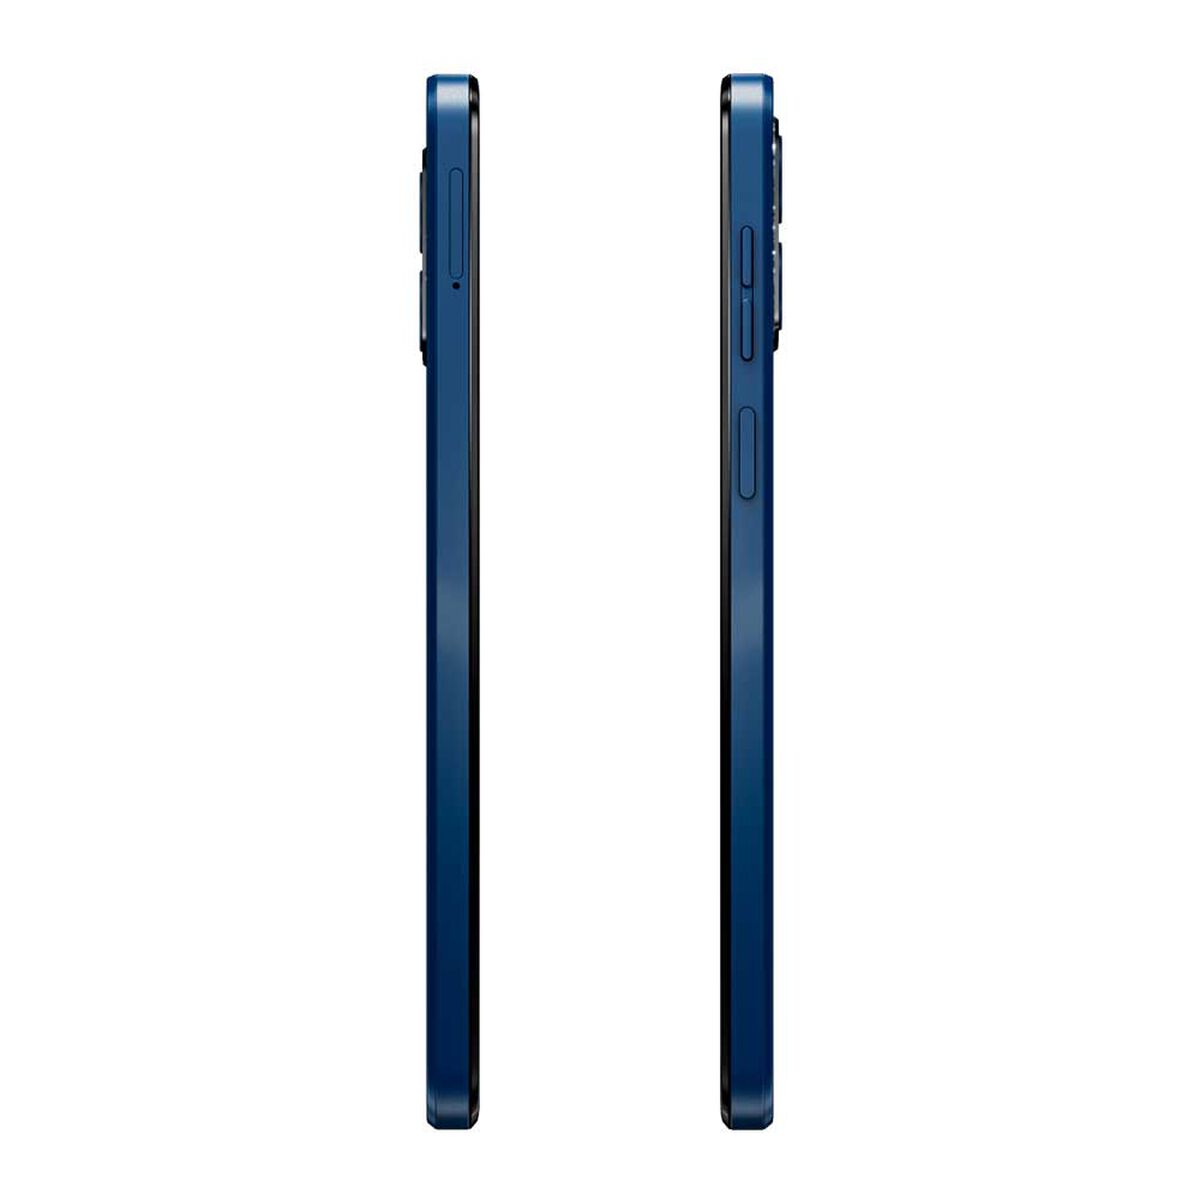 Celular Motorola Moto G14 128GB 6,5" Azul Liberado